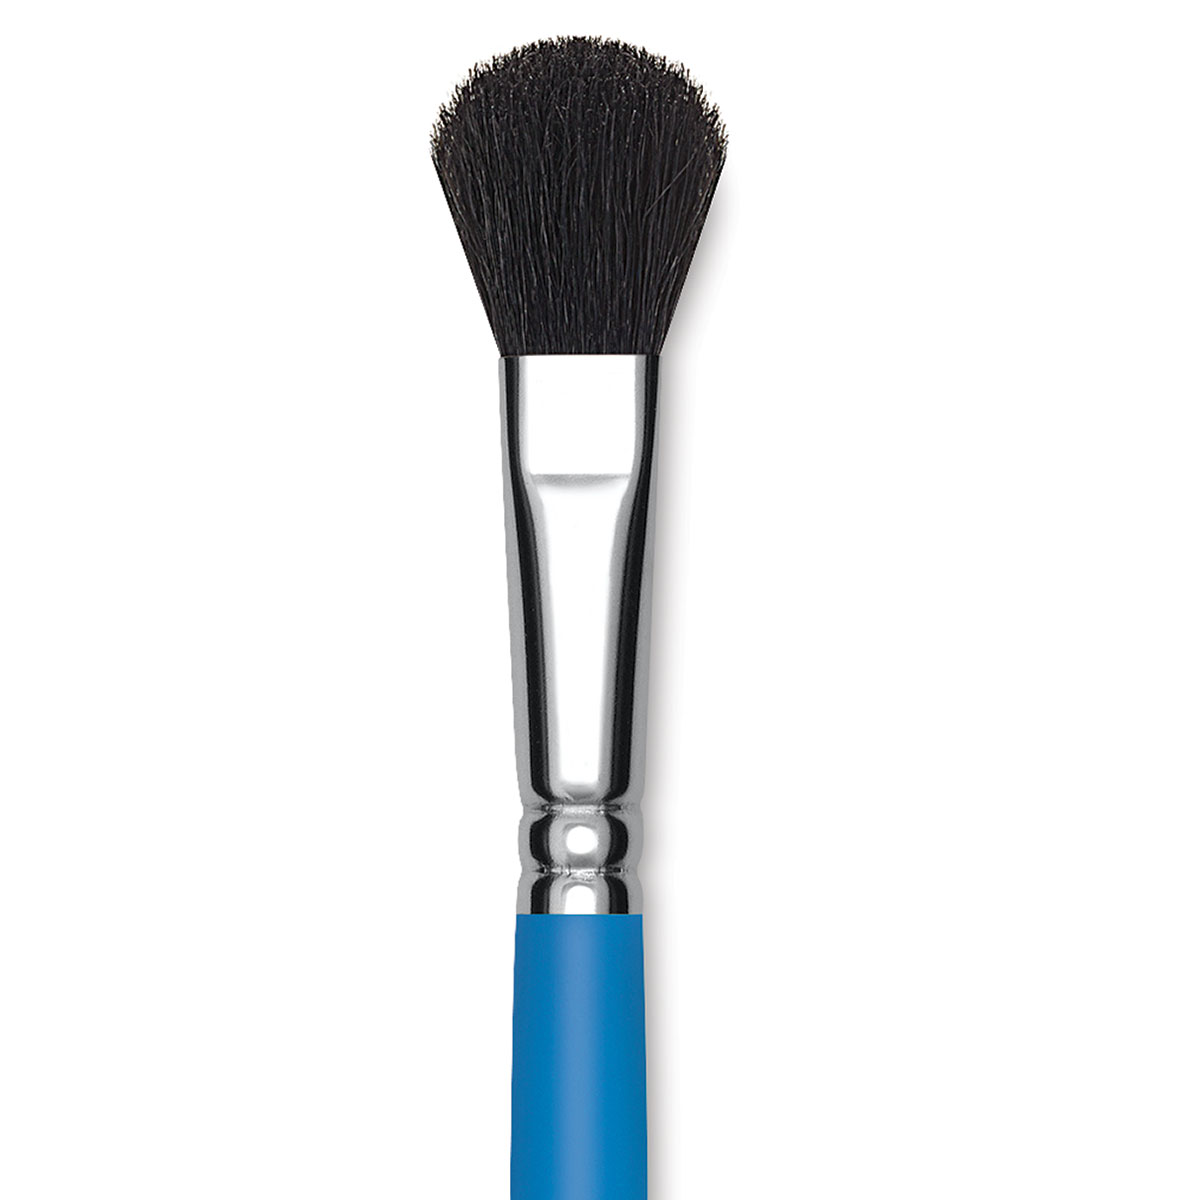 Princeton Select Natural Hair Brush-Mop 1/2 Width